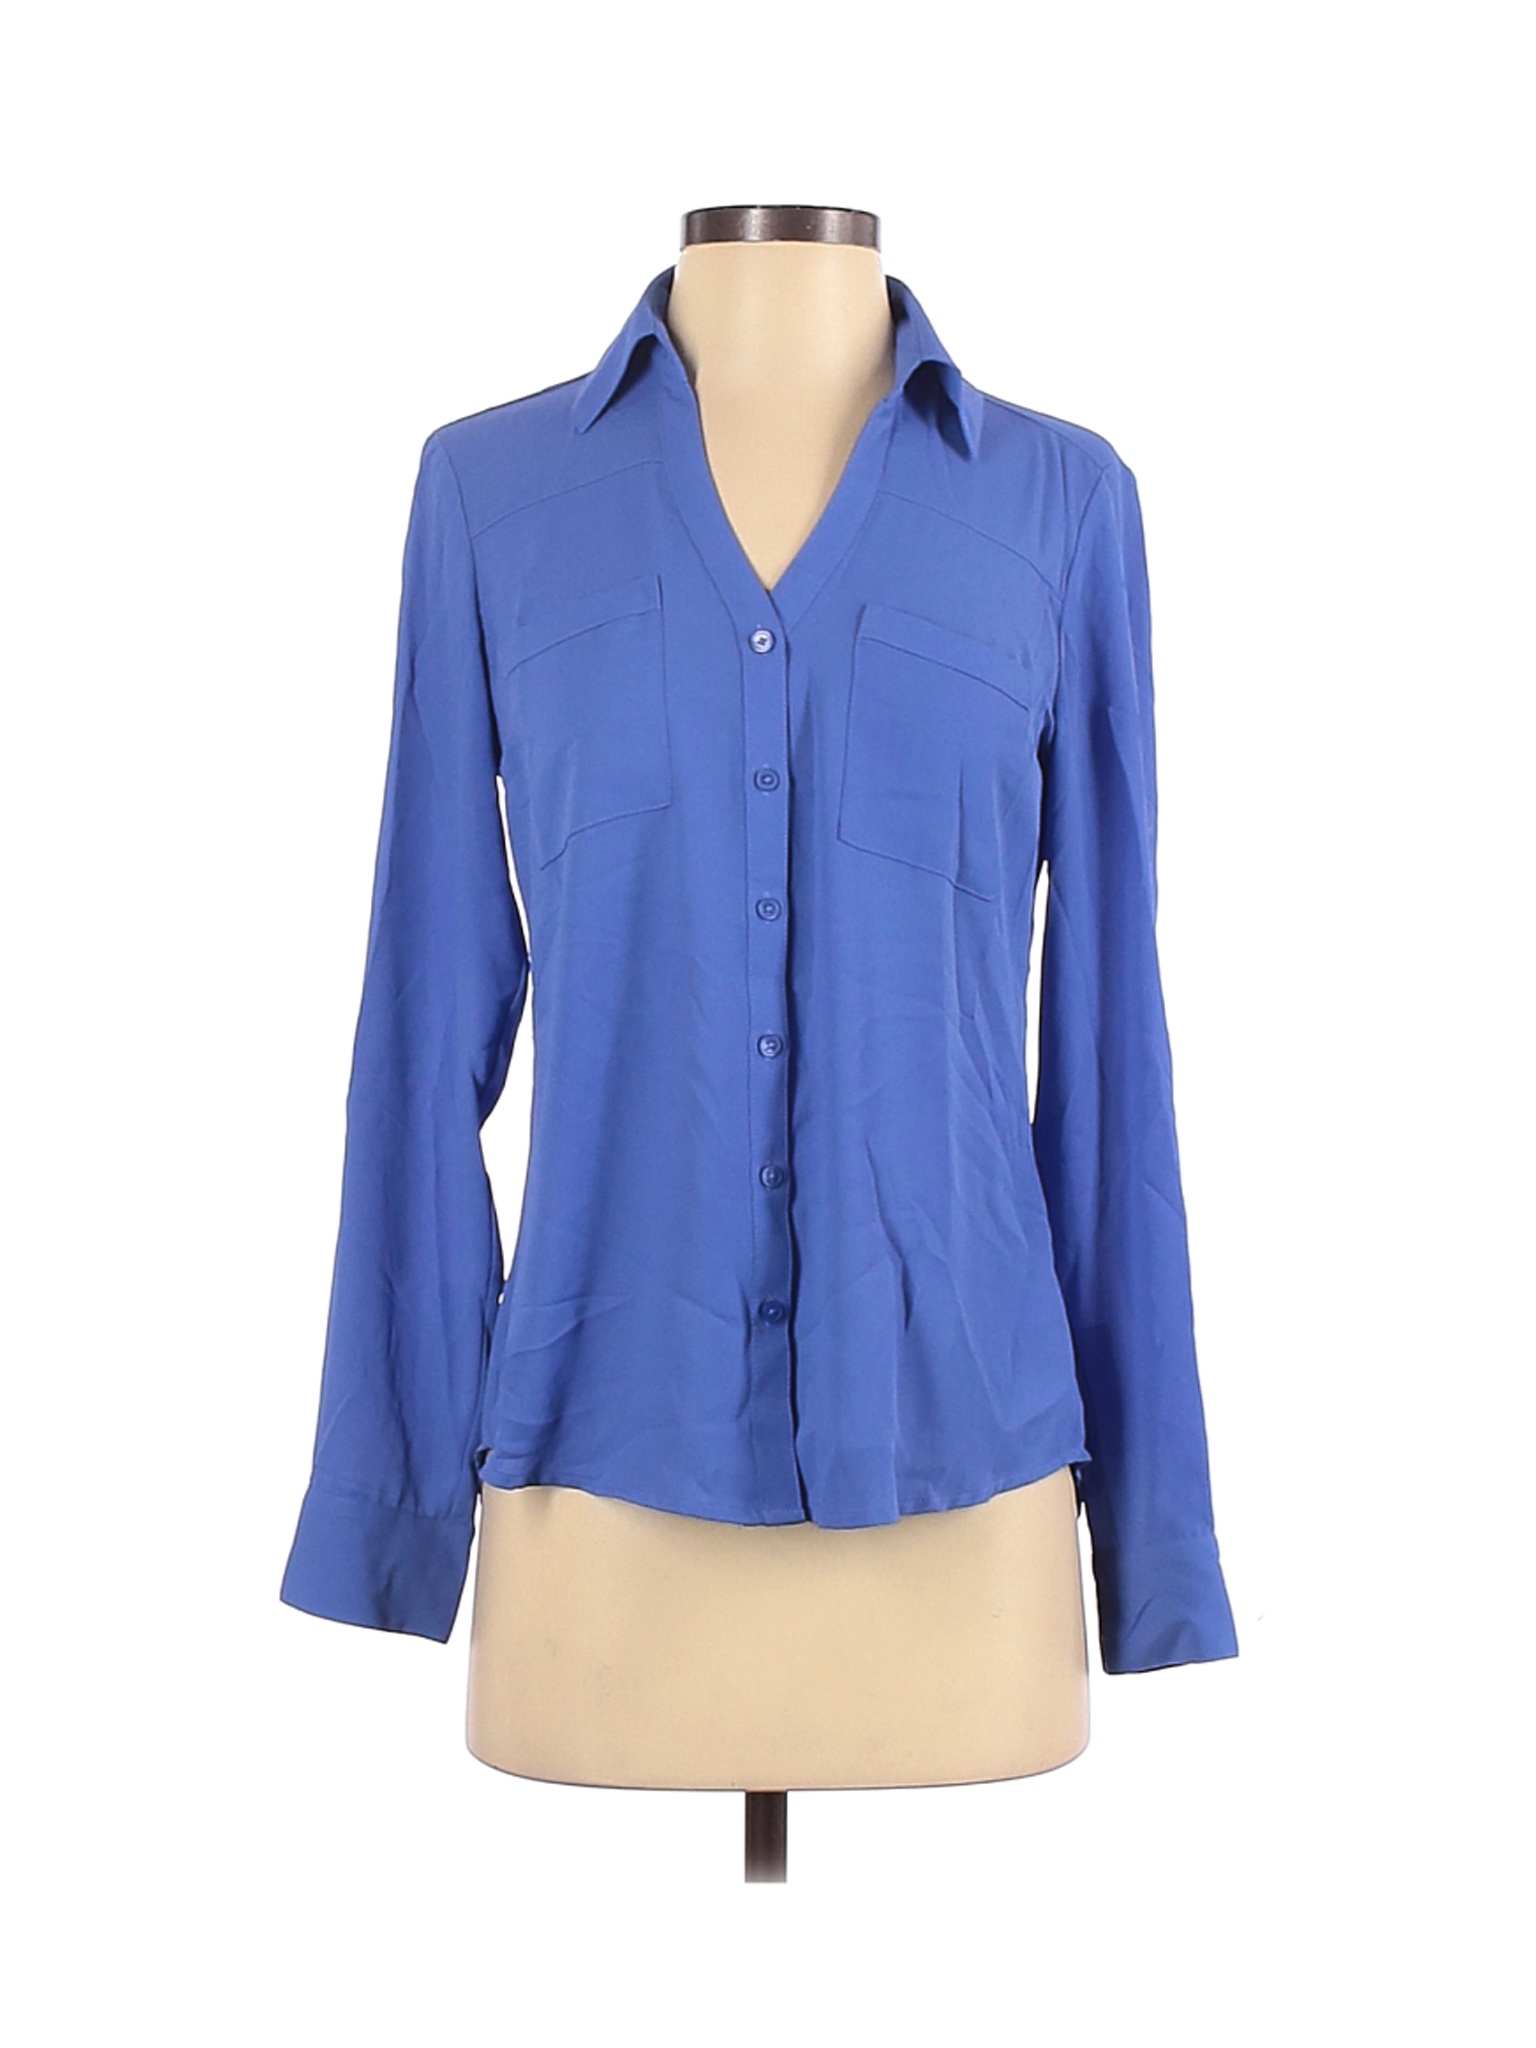 Express Women Blue Long Sleeve Blouse XS | eBay